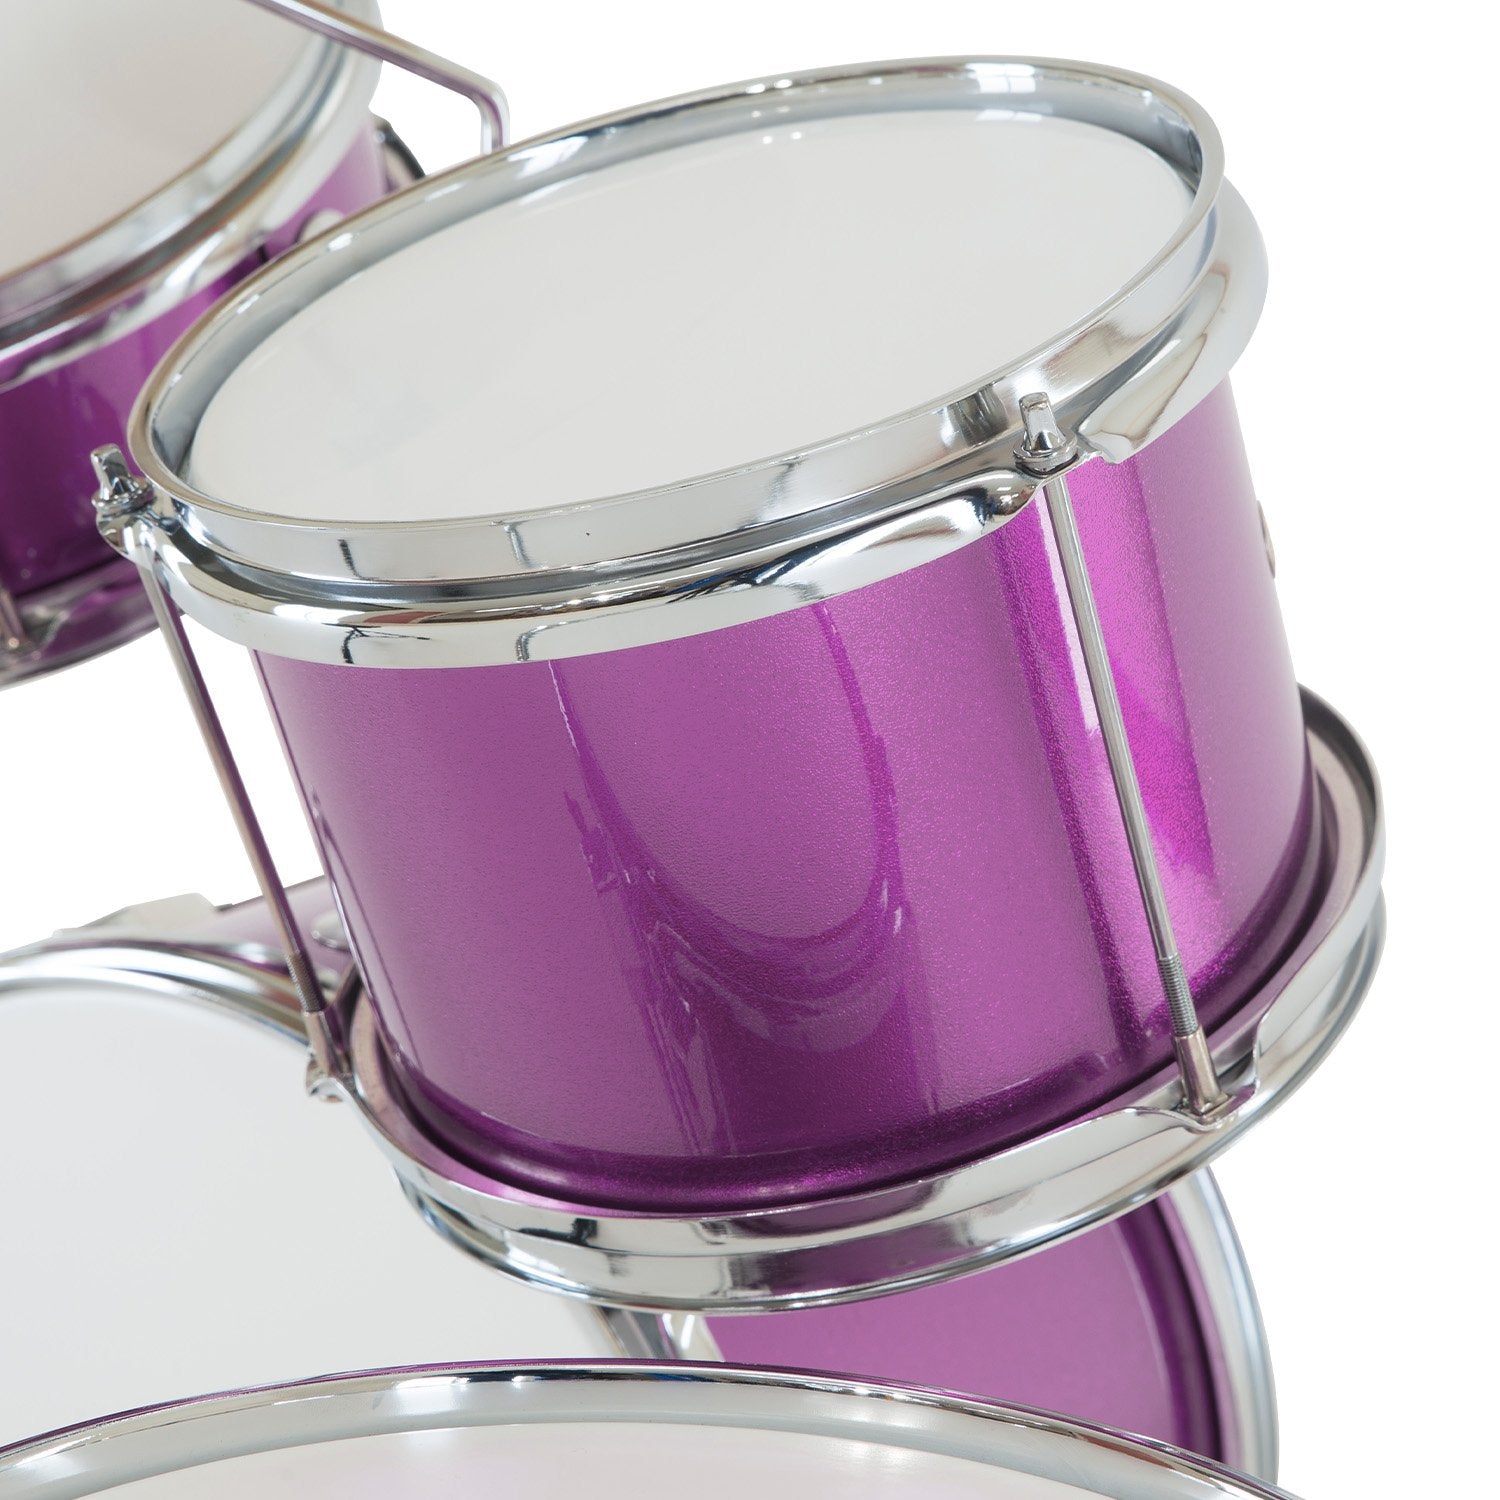 Metallic Purple 4pc Kids Drum Kit with Stool and Sticks - Karrera